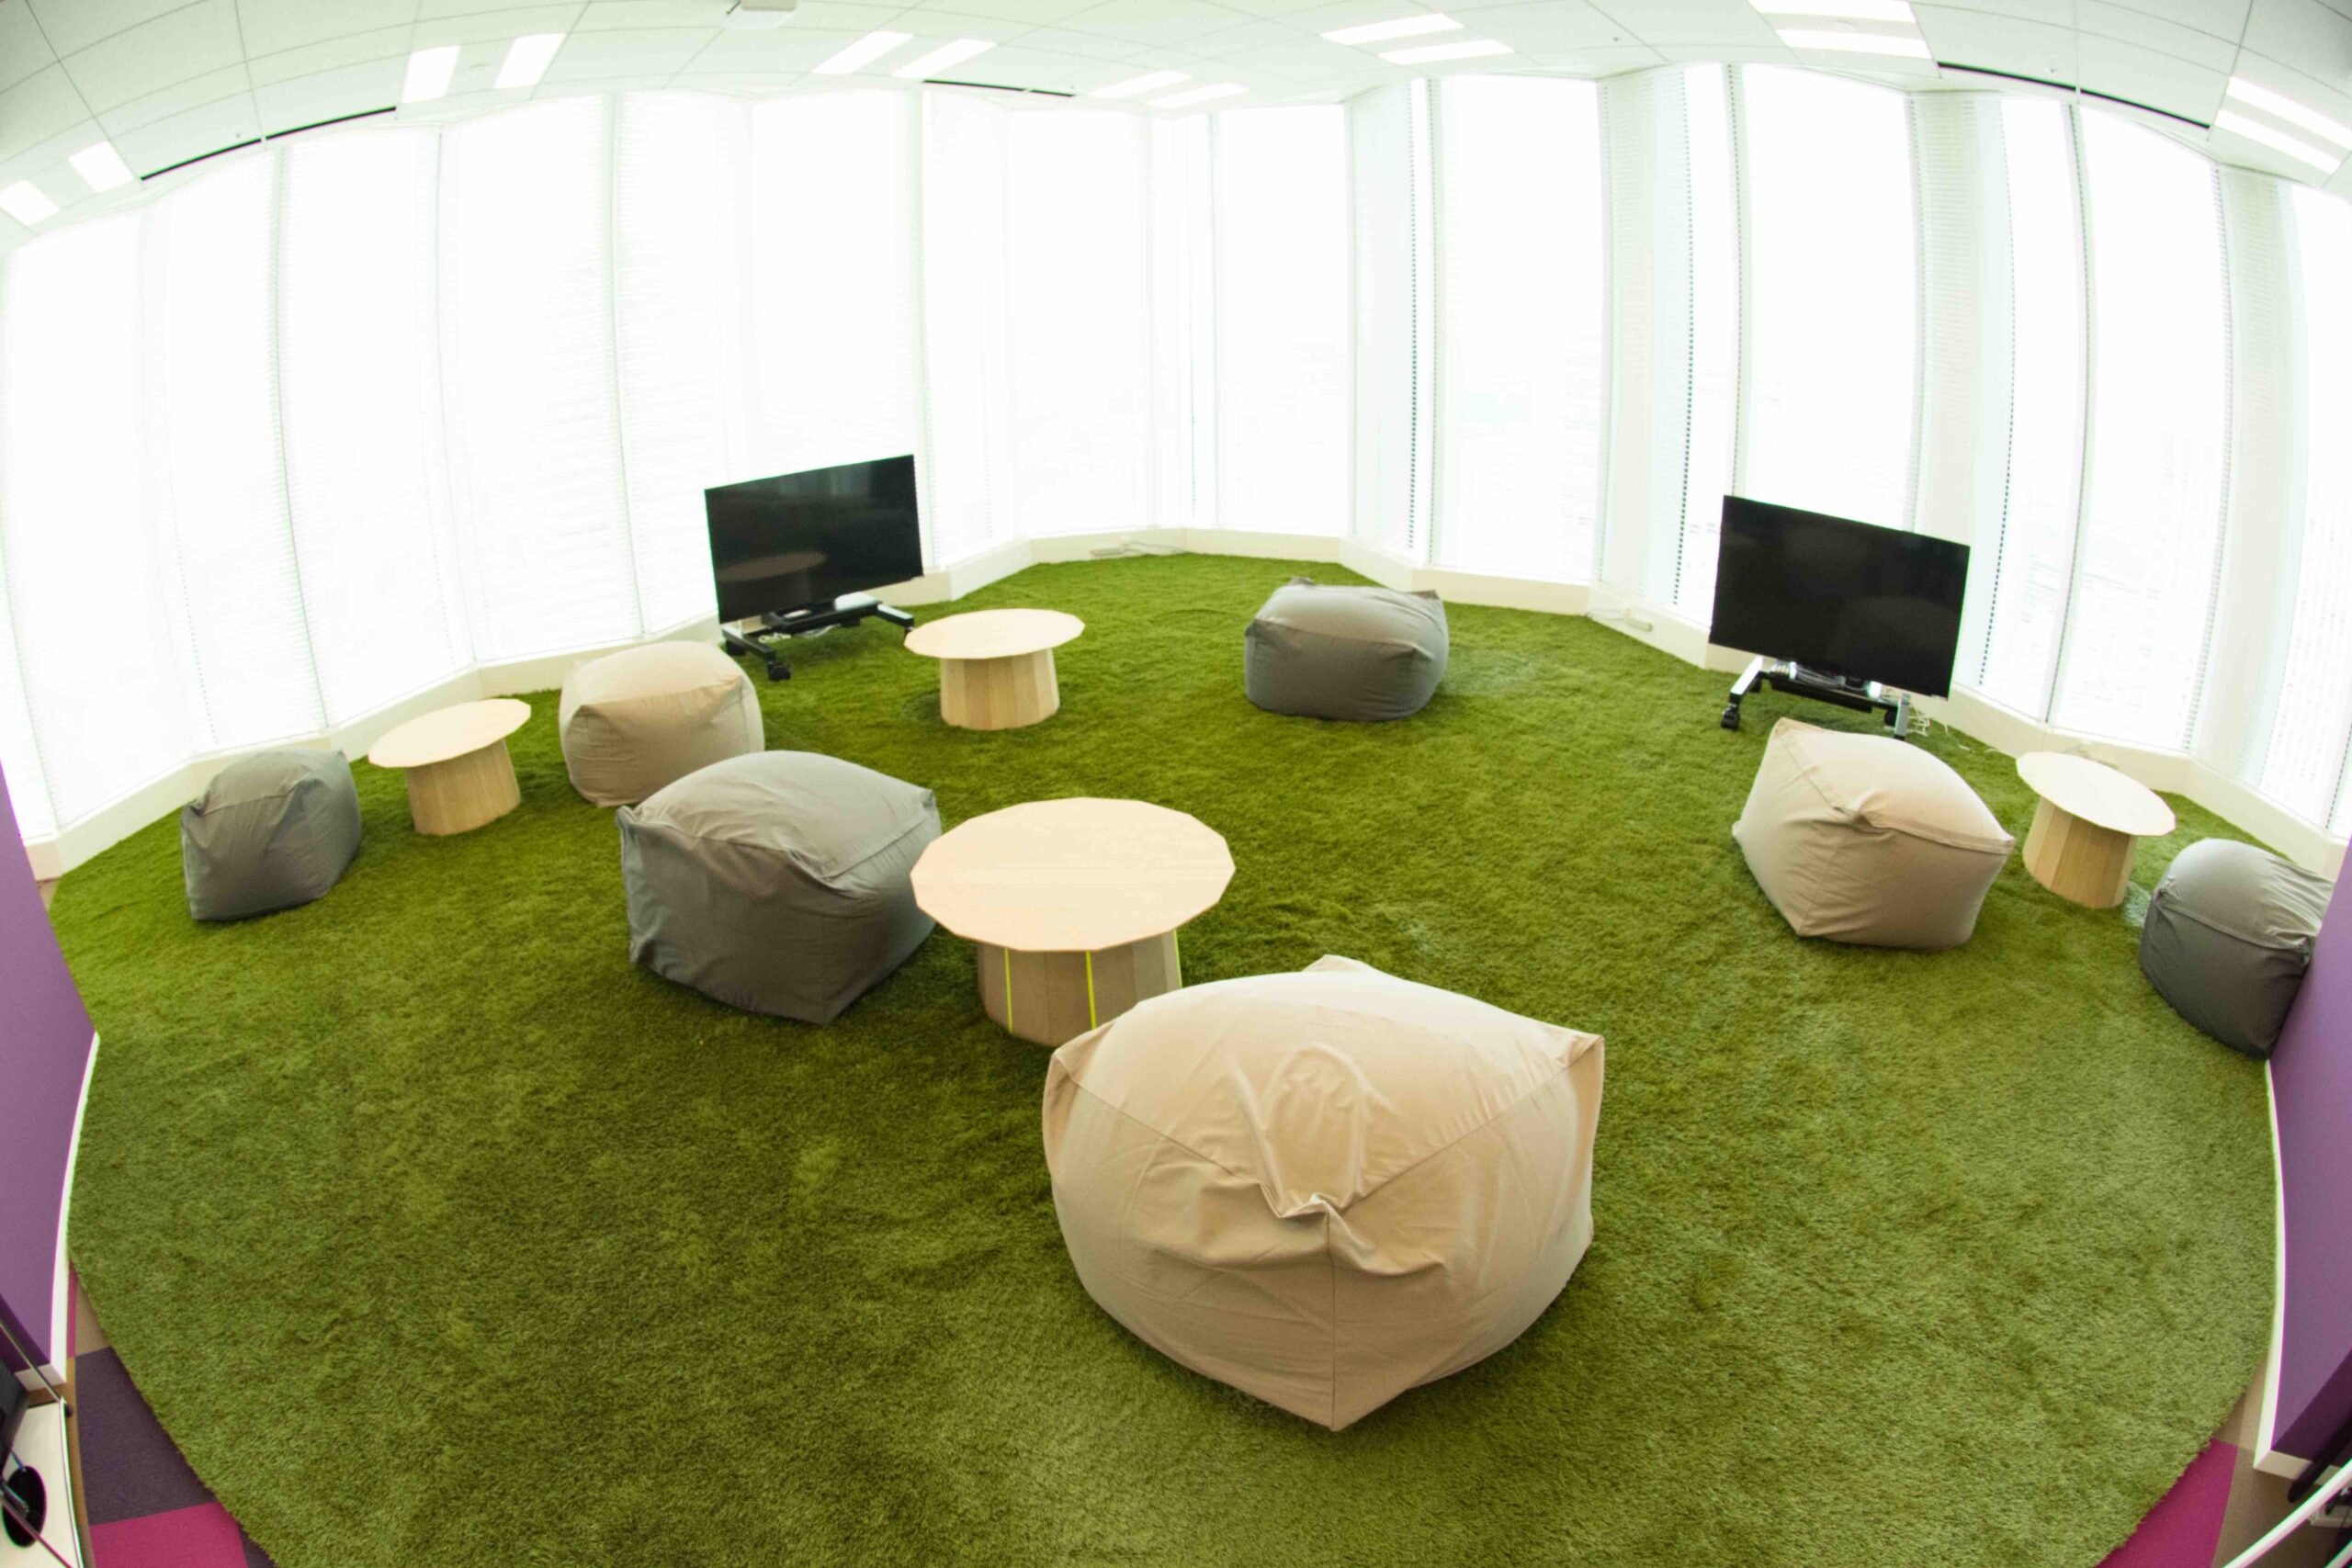 Yahoo!JAPANの「情報の交差点」がテーマの革新的なオフィスのオープンスペース